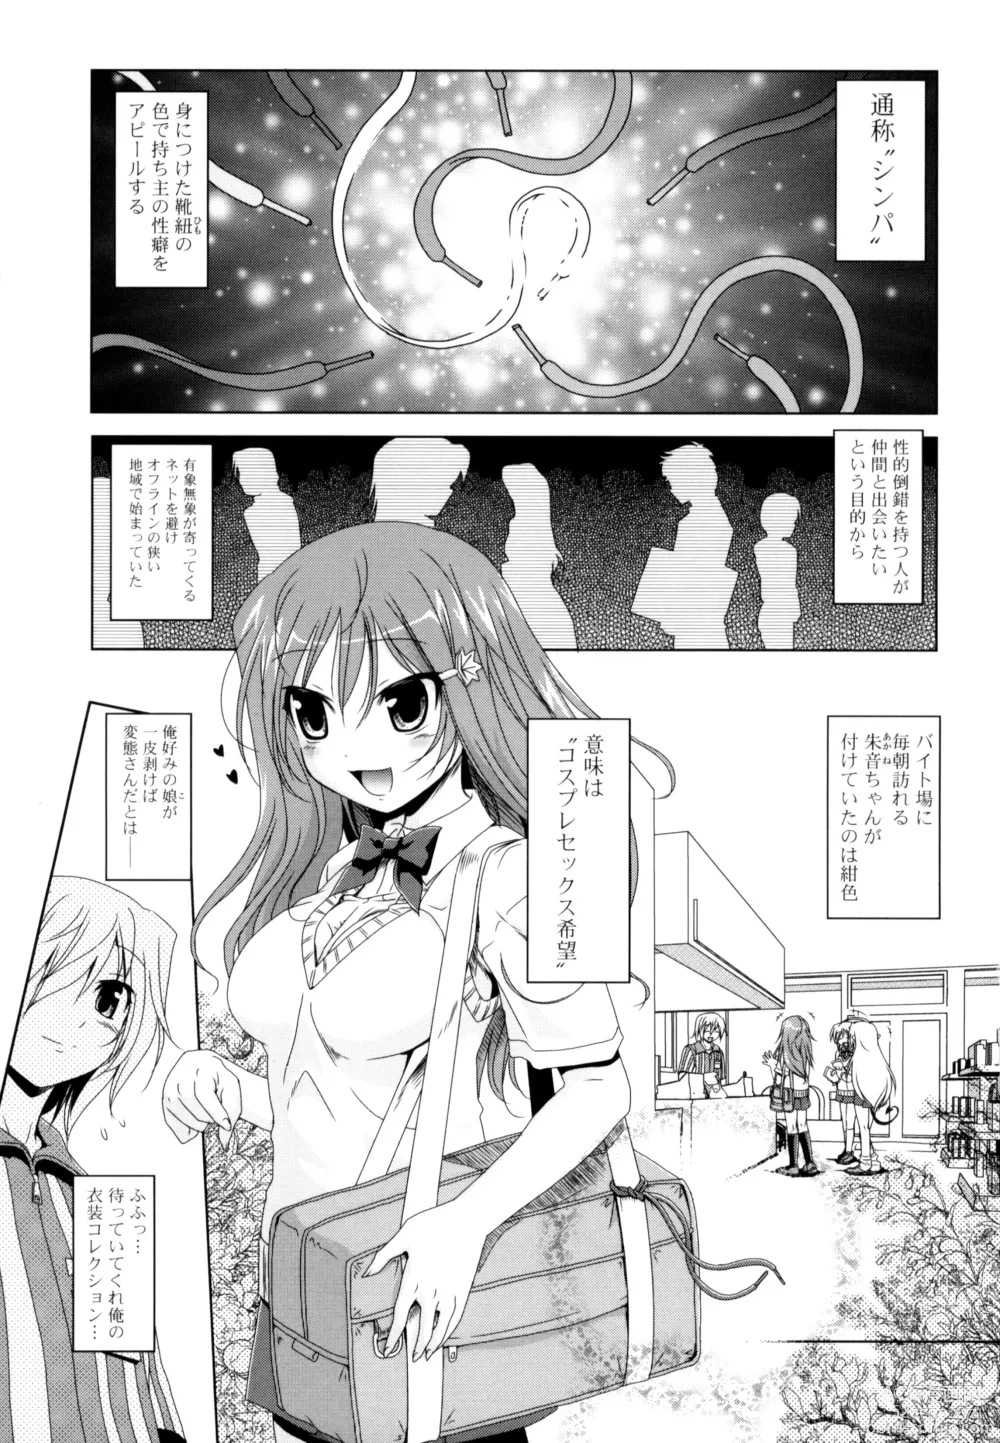 Page 5 of manga NAMA NAKA 100%!